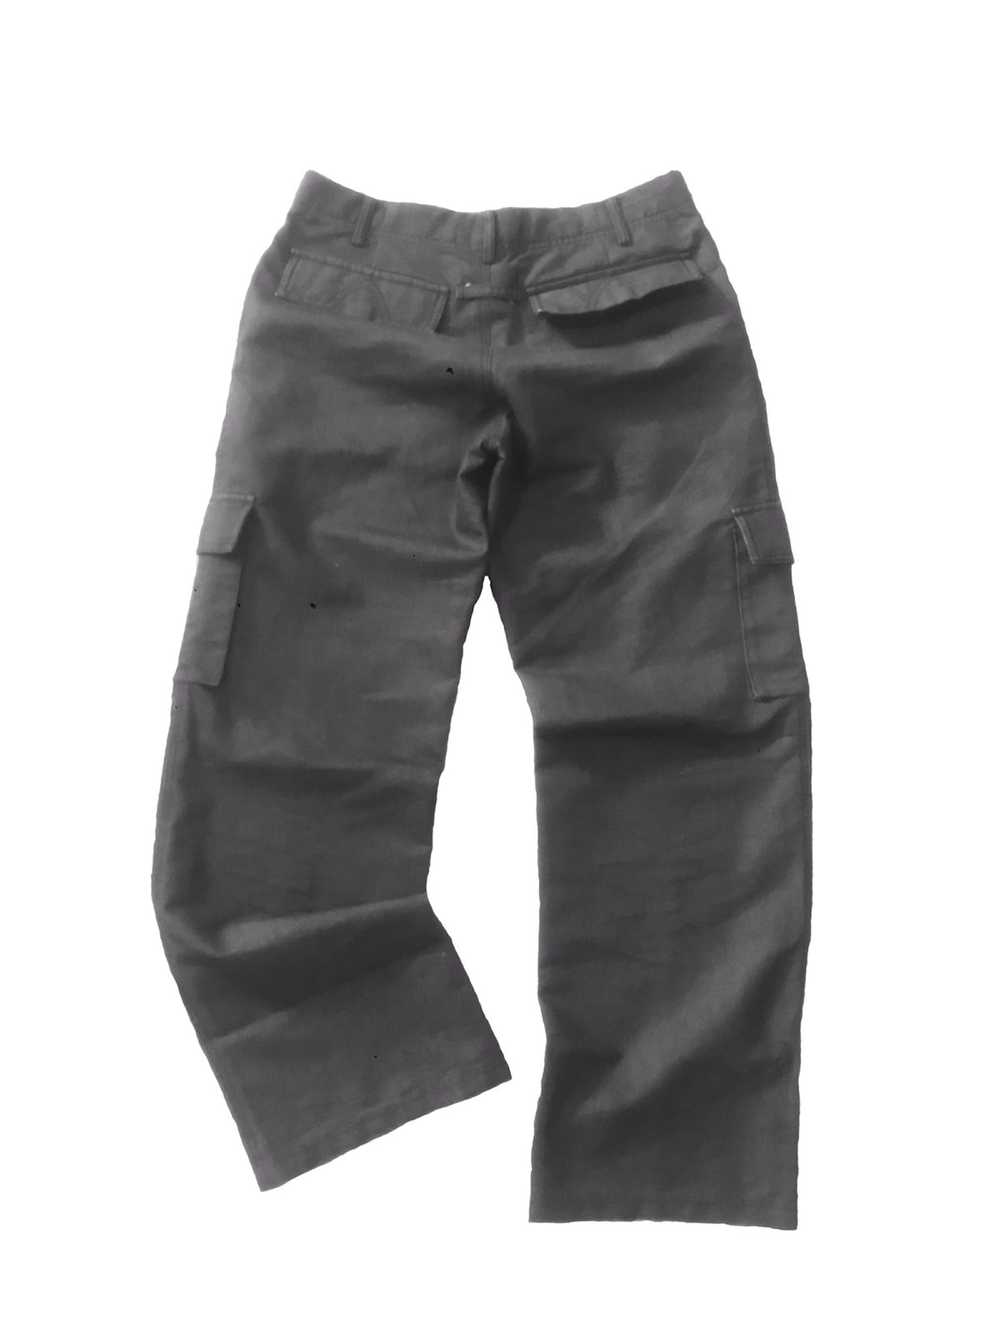 Jean Paul Gaultier Dark Grey Utility Cargo Pants - image 3